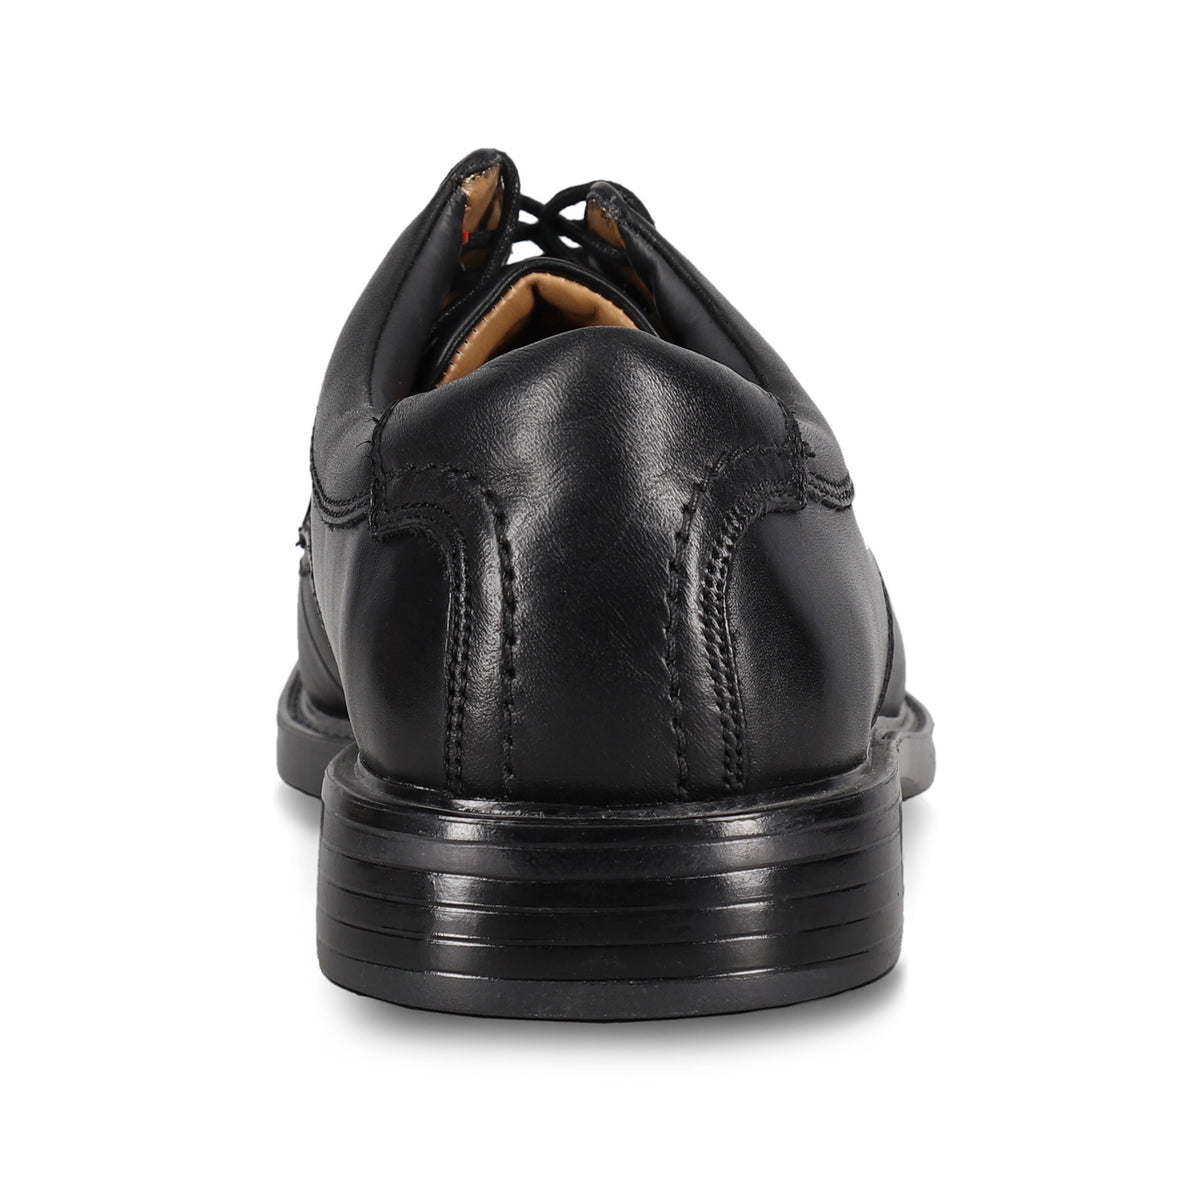 Dockers Shoes Fidelity Black Shoes